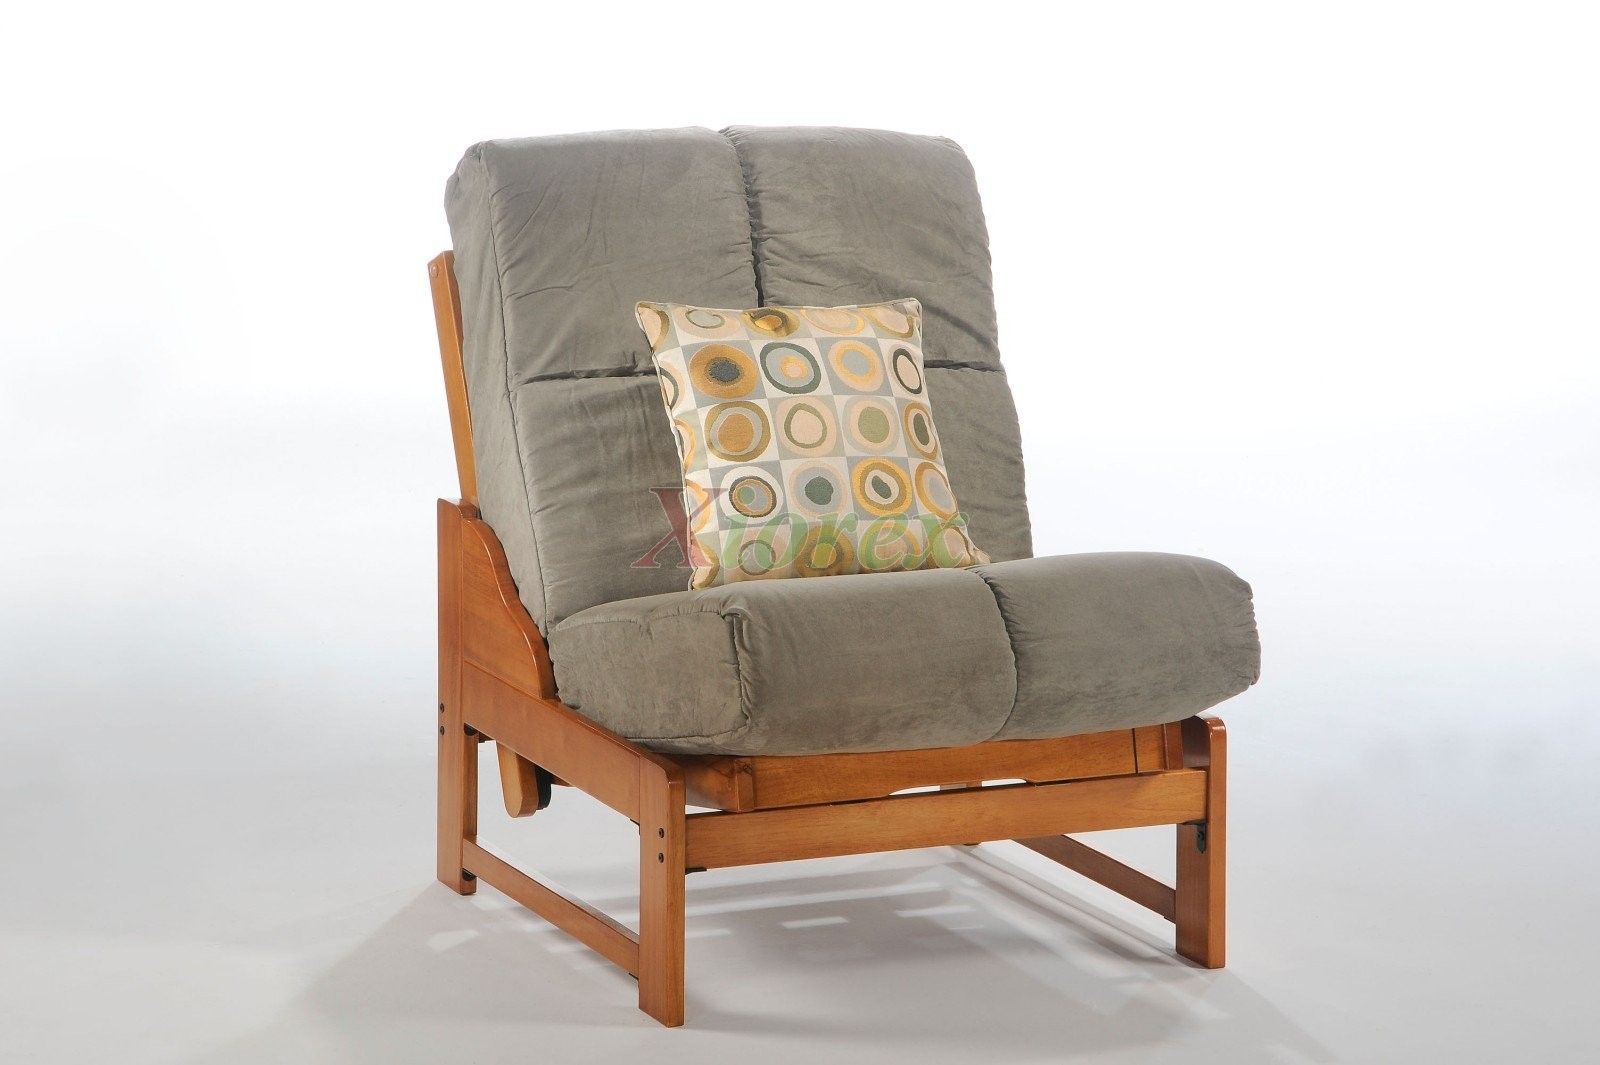 Image of the design options for two futon chairs CJXGDPU